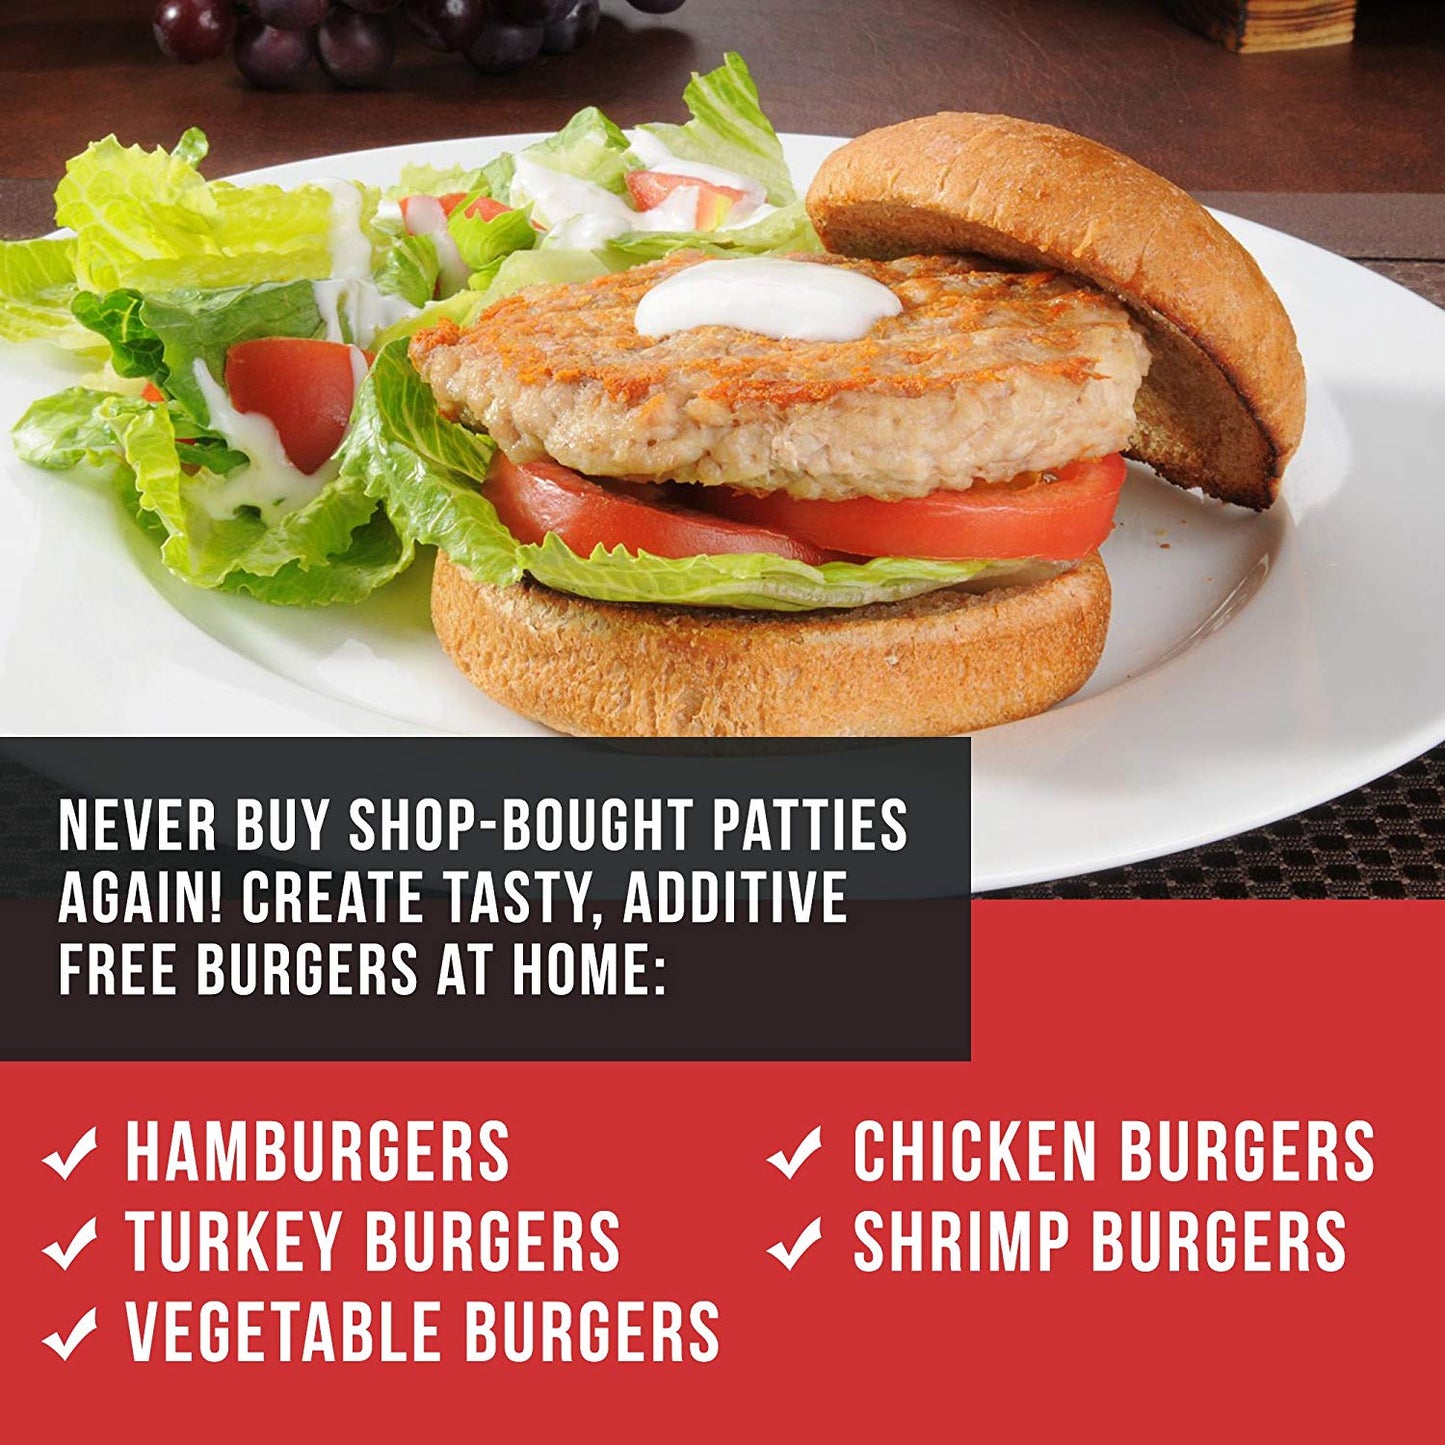 Chef Remi Burger Press | Non-Stick Professional Hamburger Press & Patty Maker